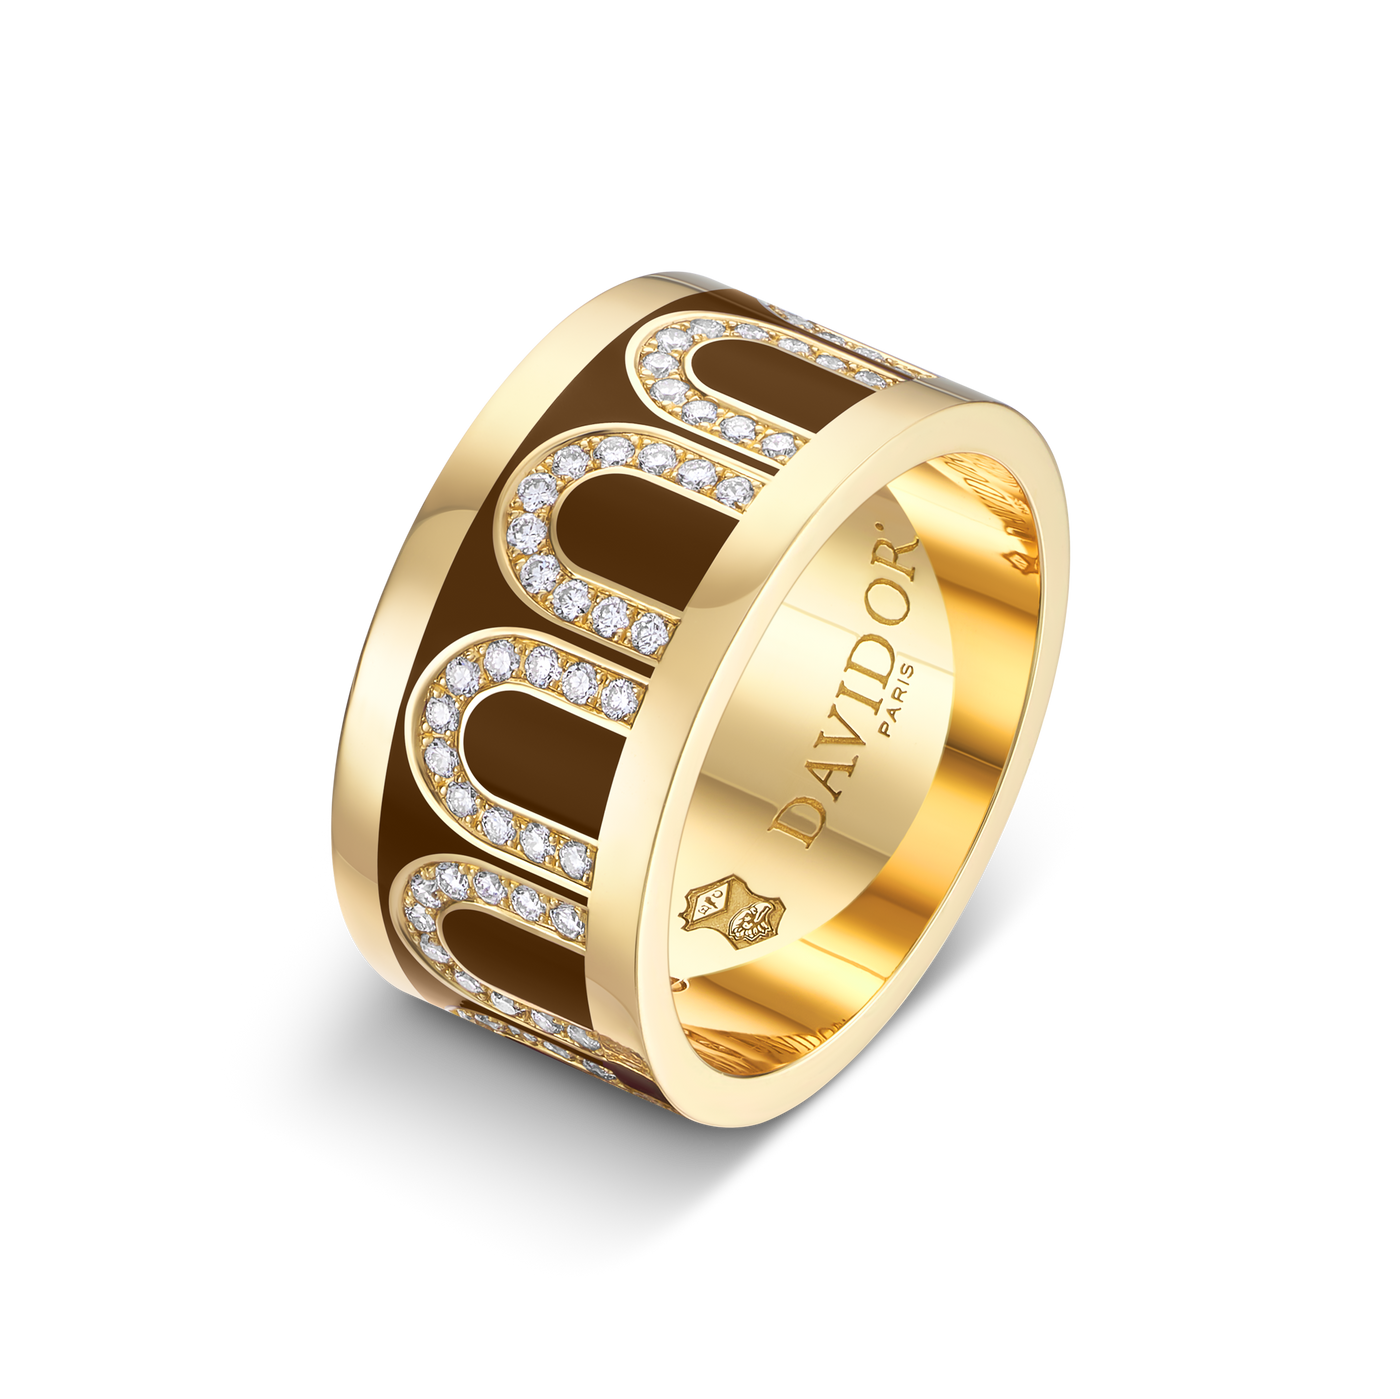 L'Arc de DAVIDOR Ring GM, 18k Yellow Gold with Cognac Lacquered Ceramic and Arcade Diamonds - DAVIDOR